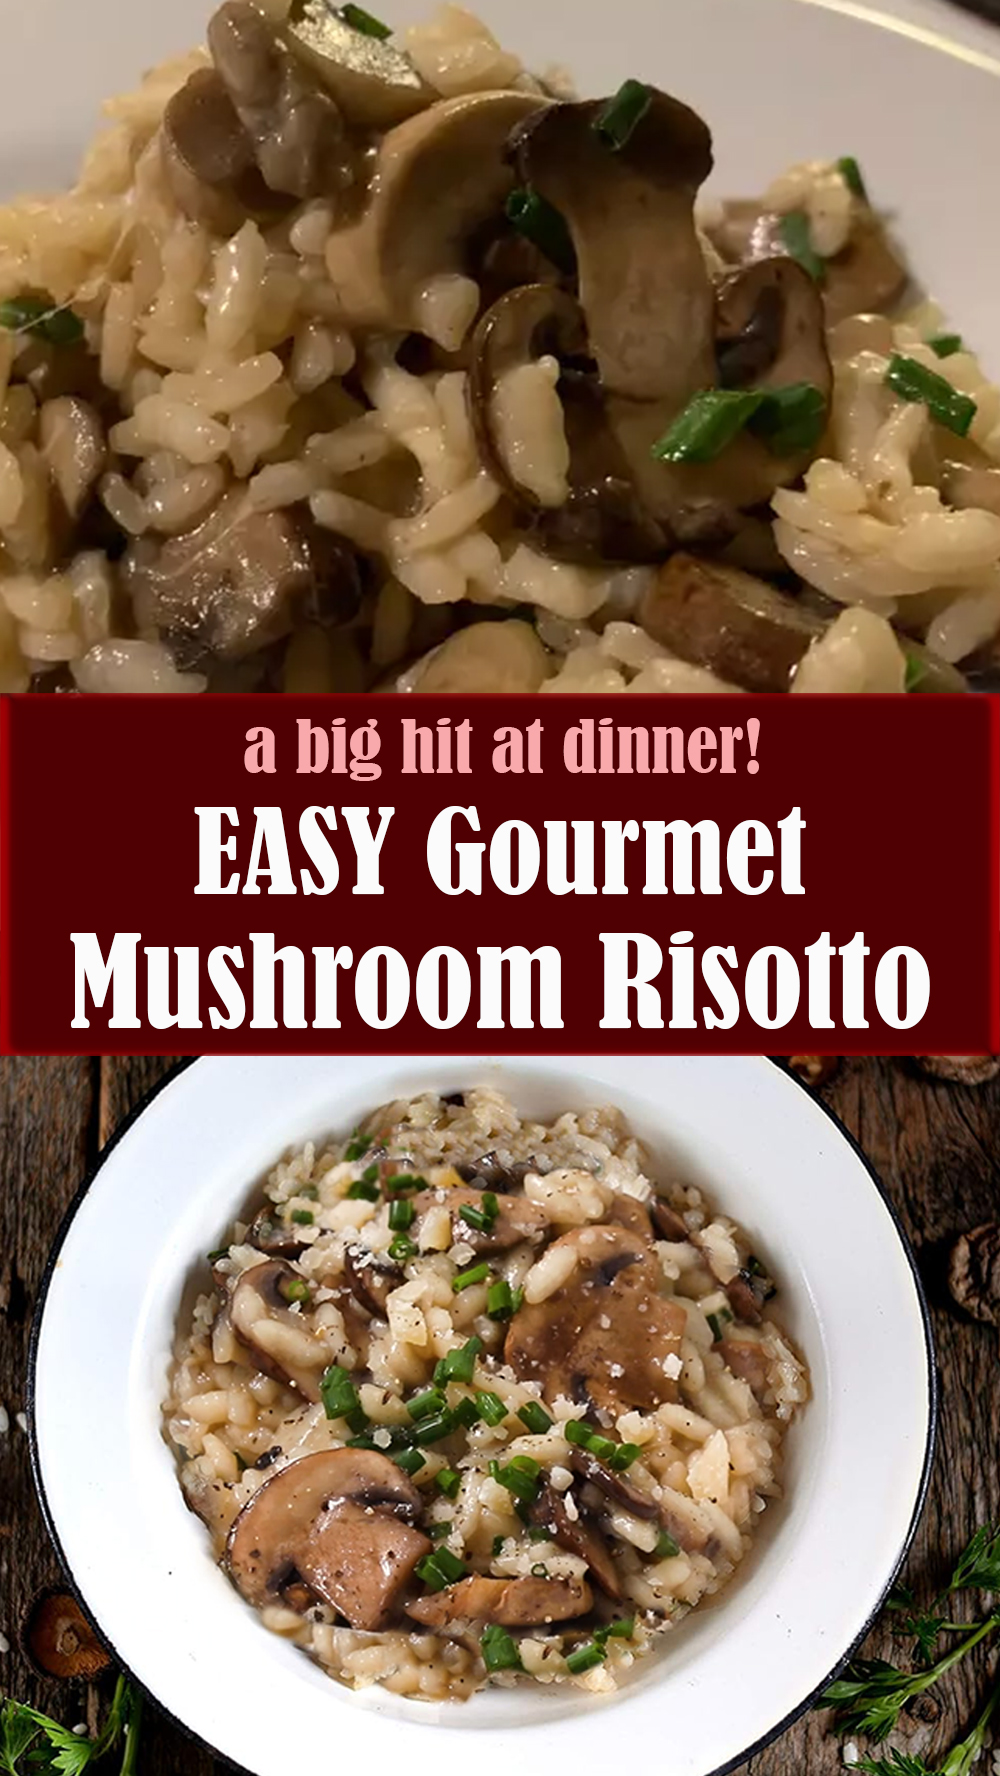 EASY Gourmet Mushroom Risotto